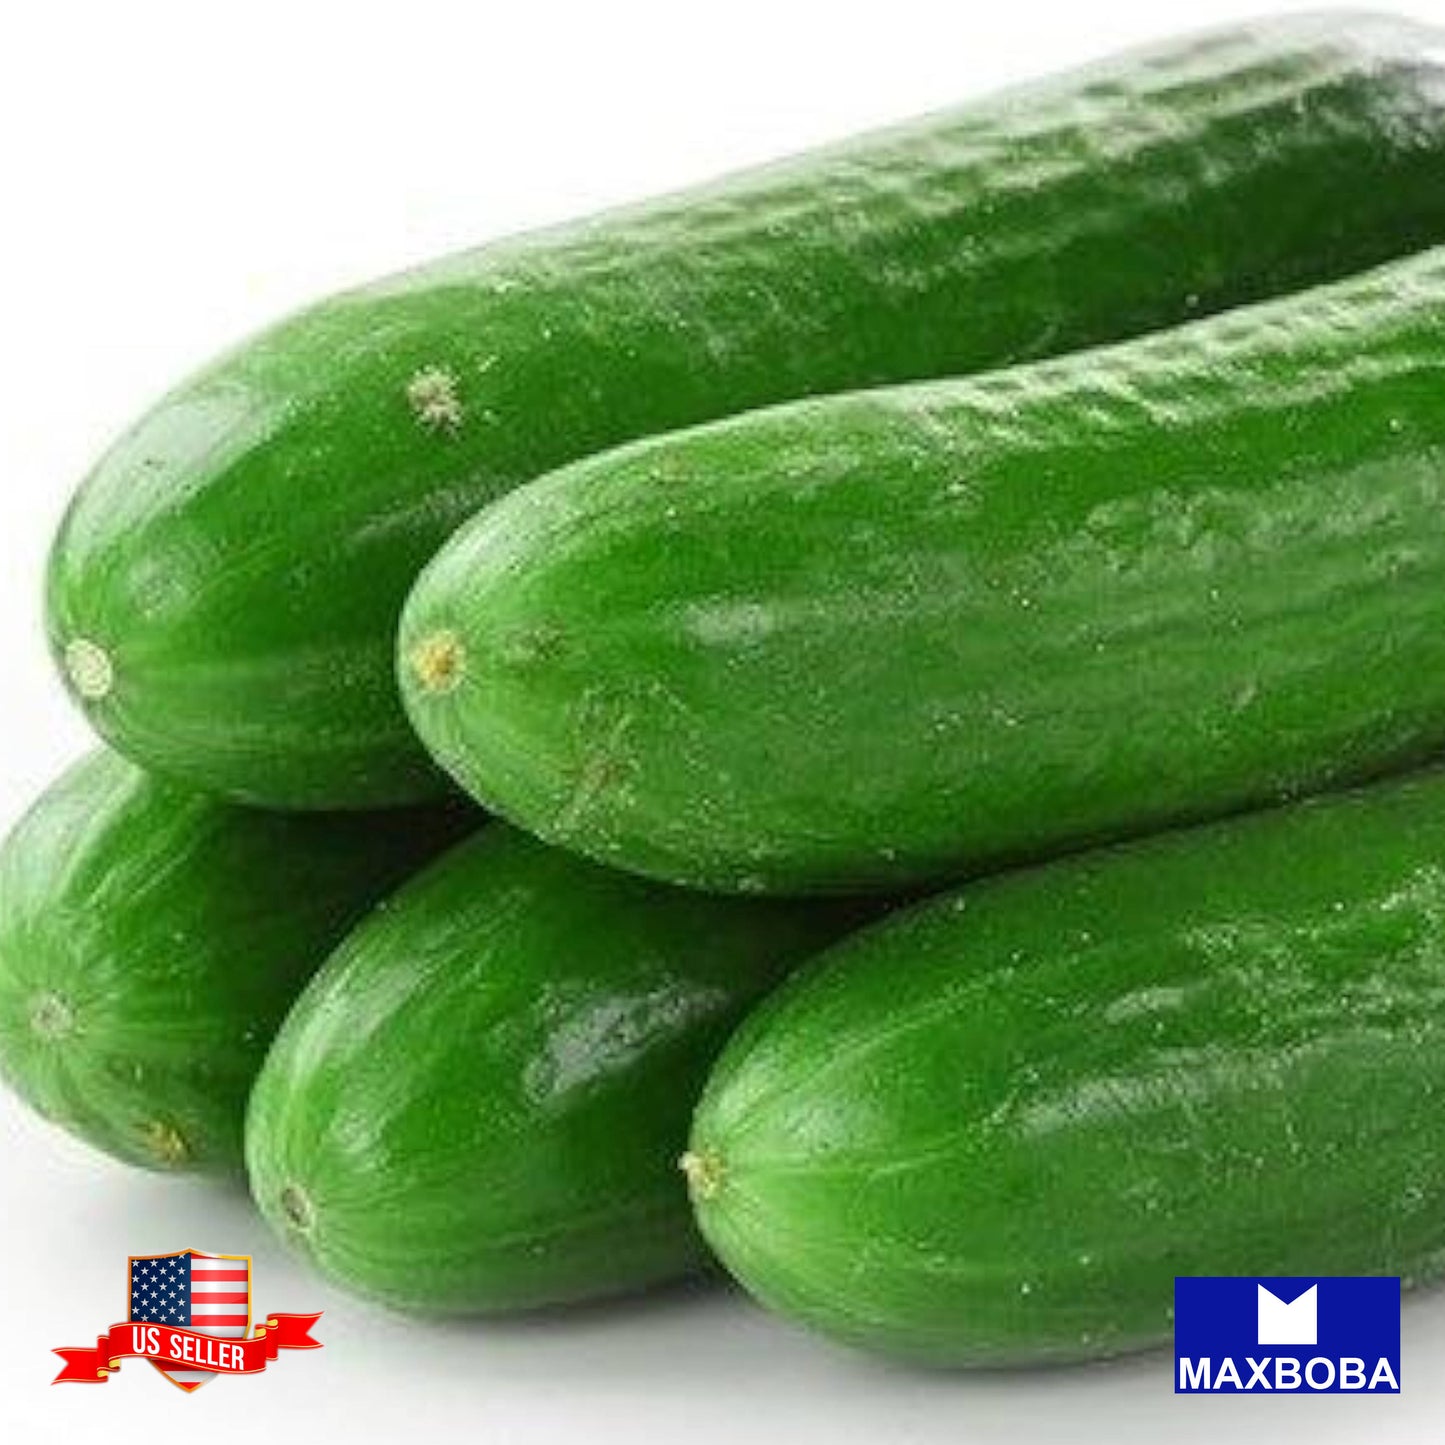 Cucumber Marketer Seeds Heirloom Vegetable Non-GMO